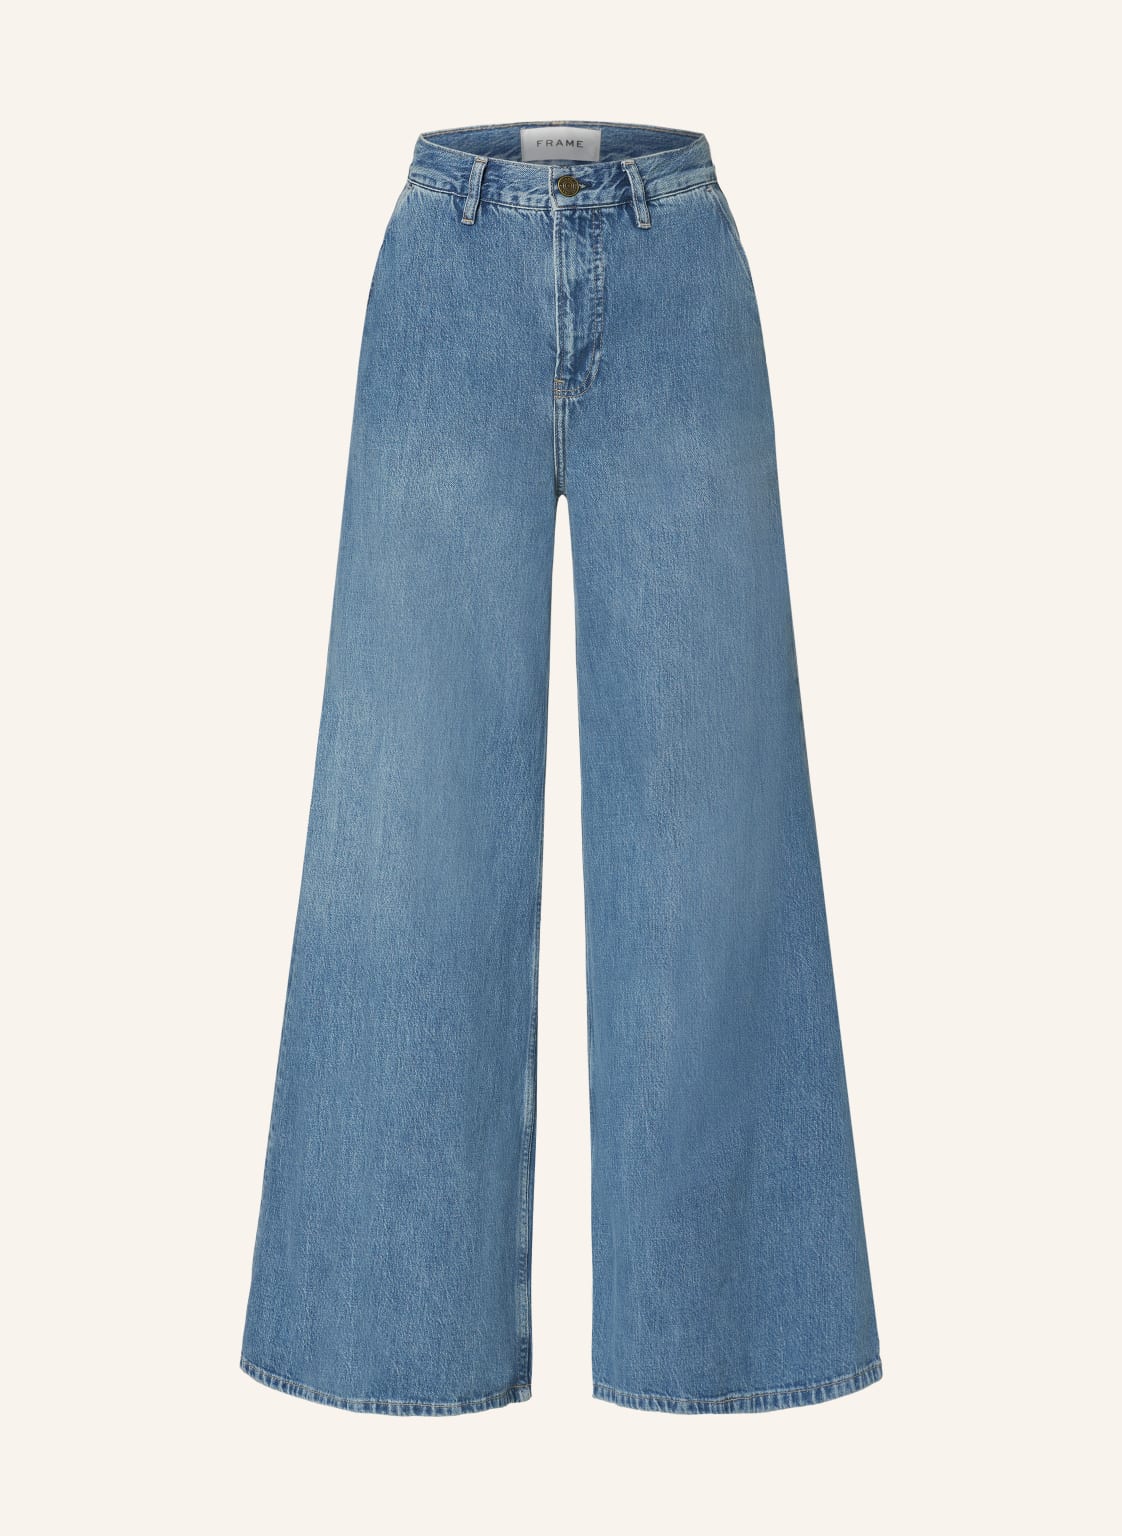 Frame Flared Jeans The Extra Wide Leg blau von FRAME